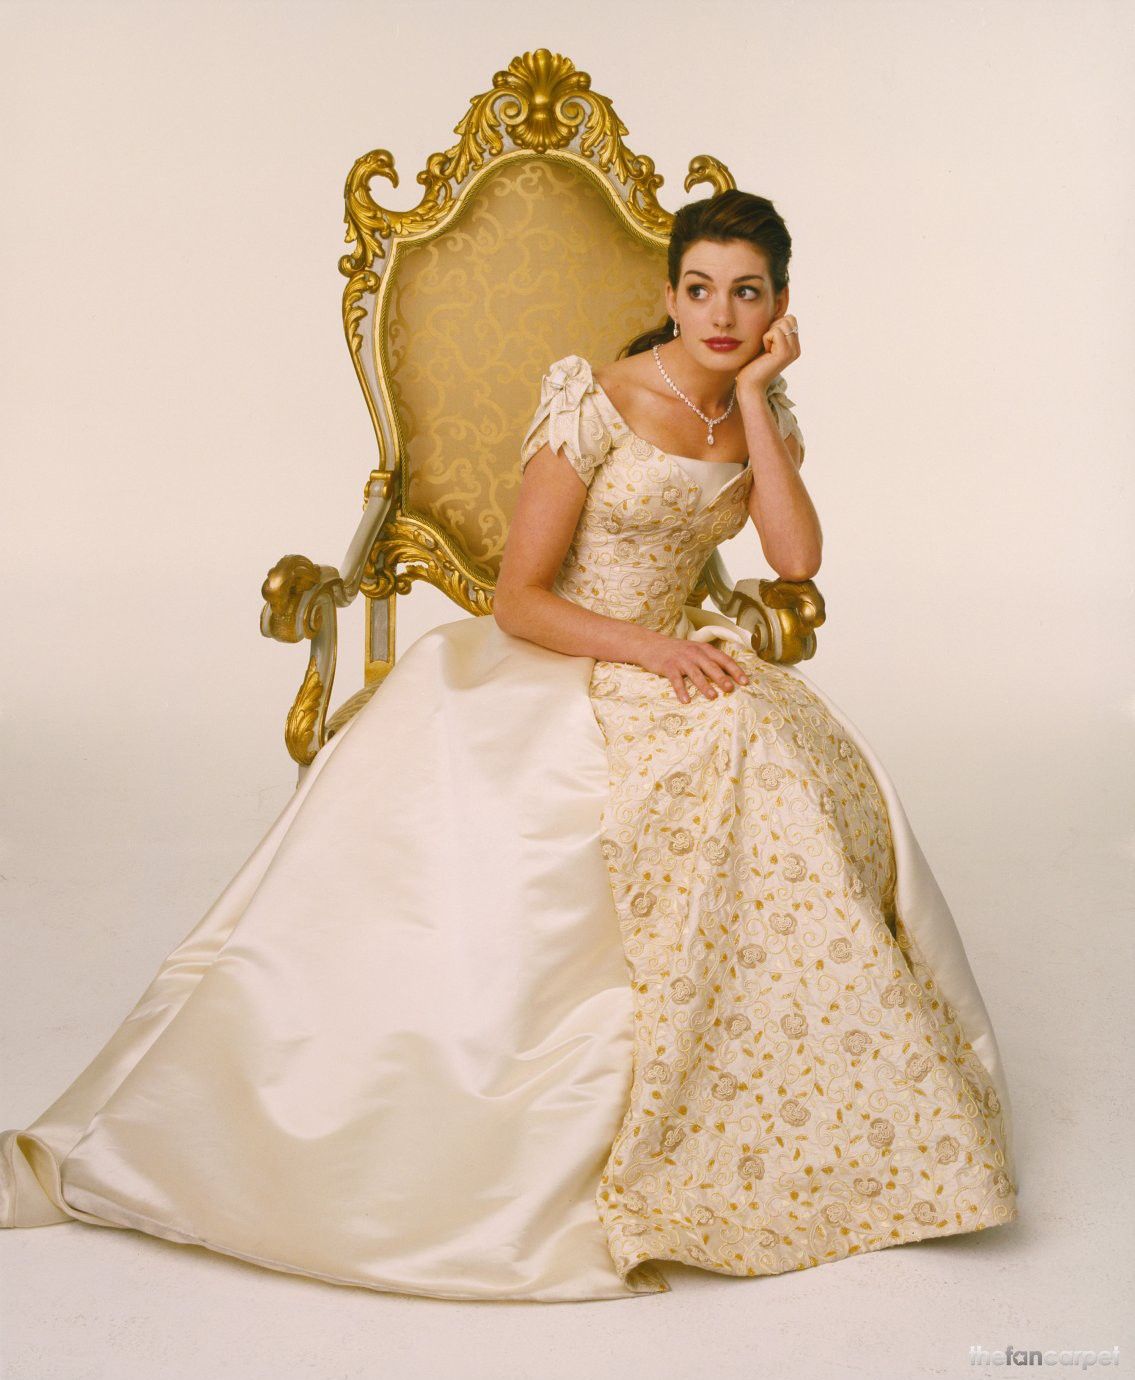 The Princess Diaries 2: Royal Engagement. The Fan Carpet